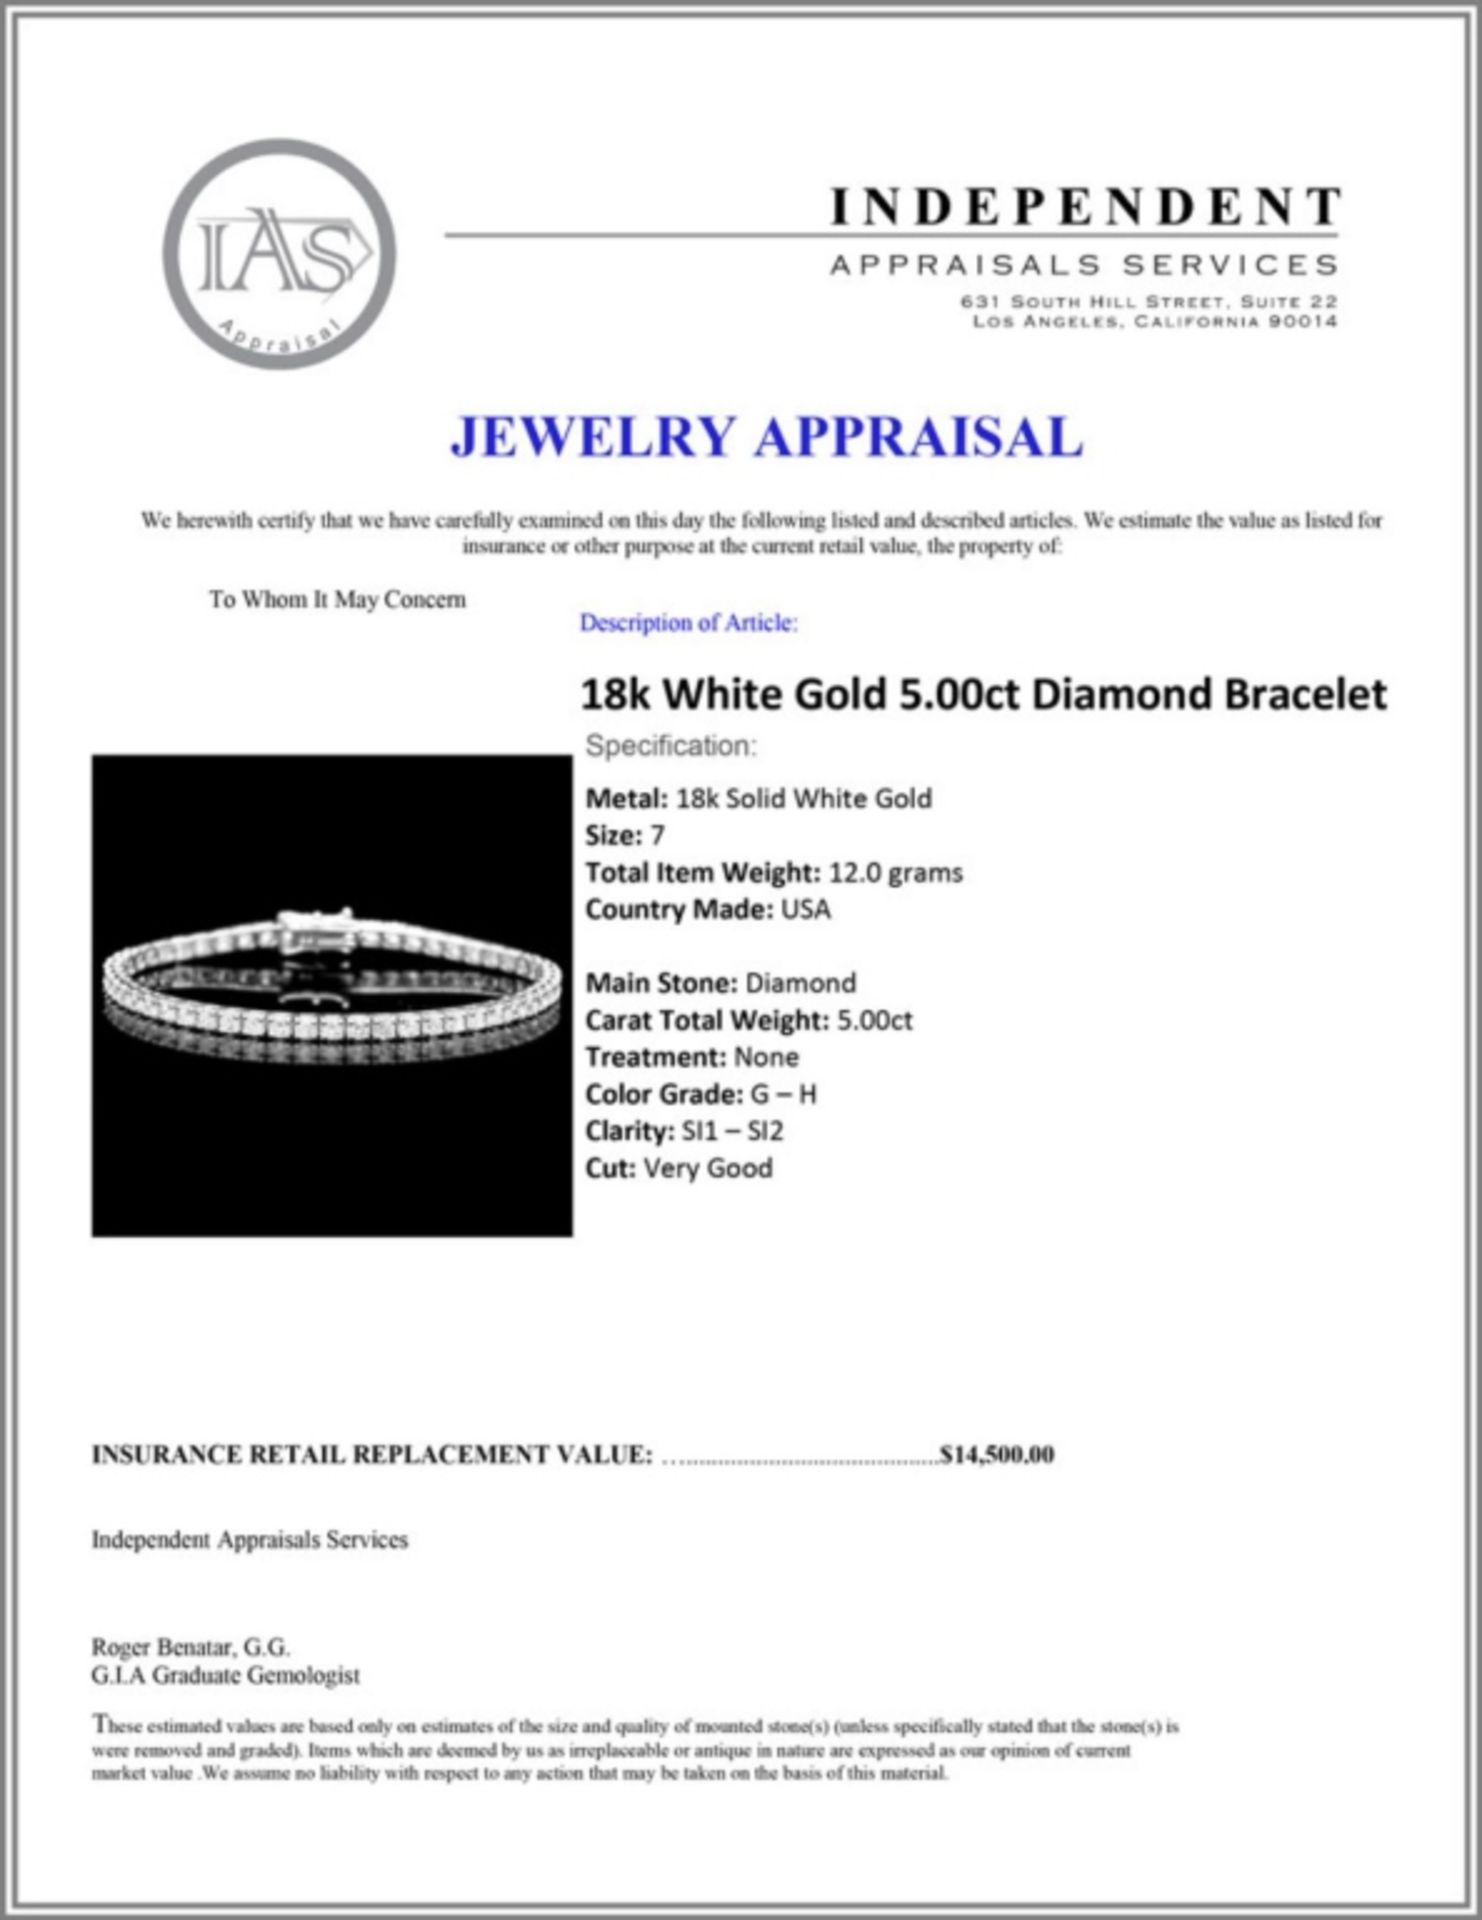 ^18k White Gold 5.00ct Diamond Bracelet - Image 3 of 3